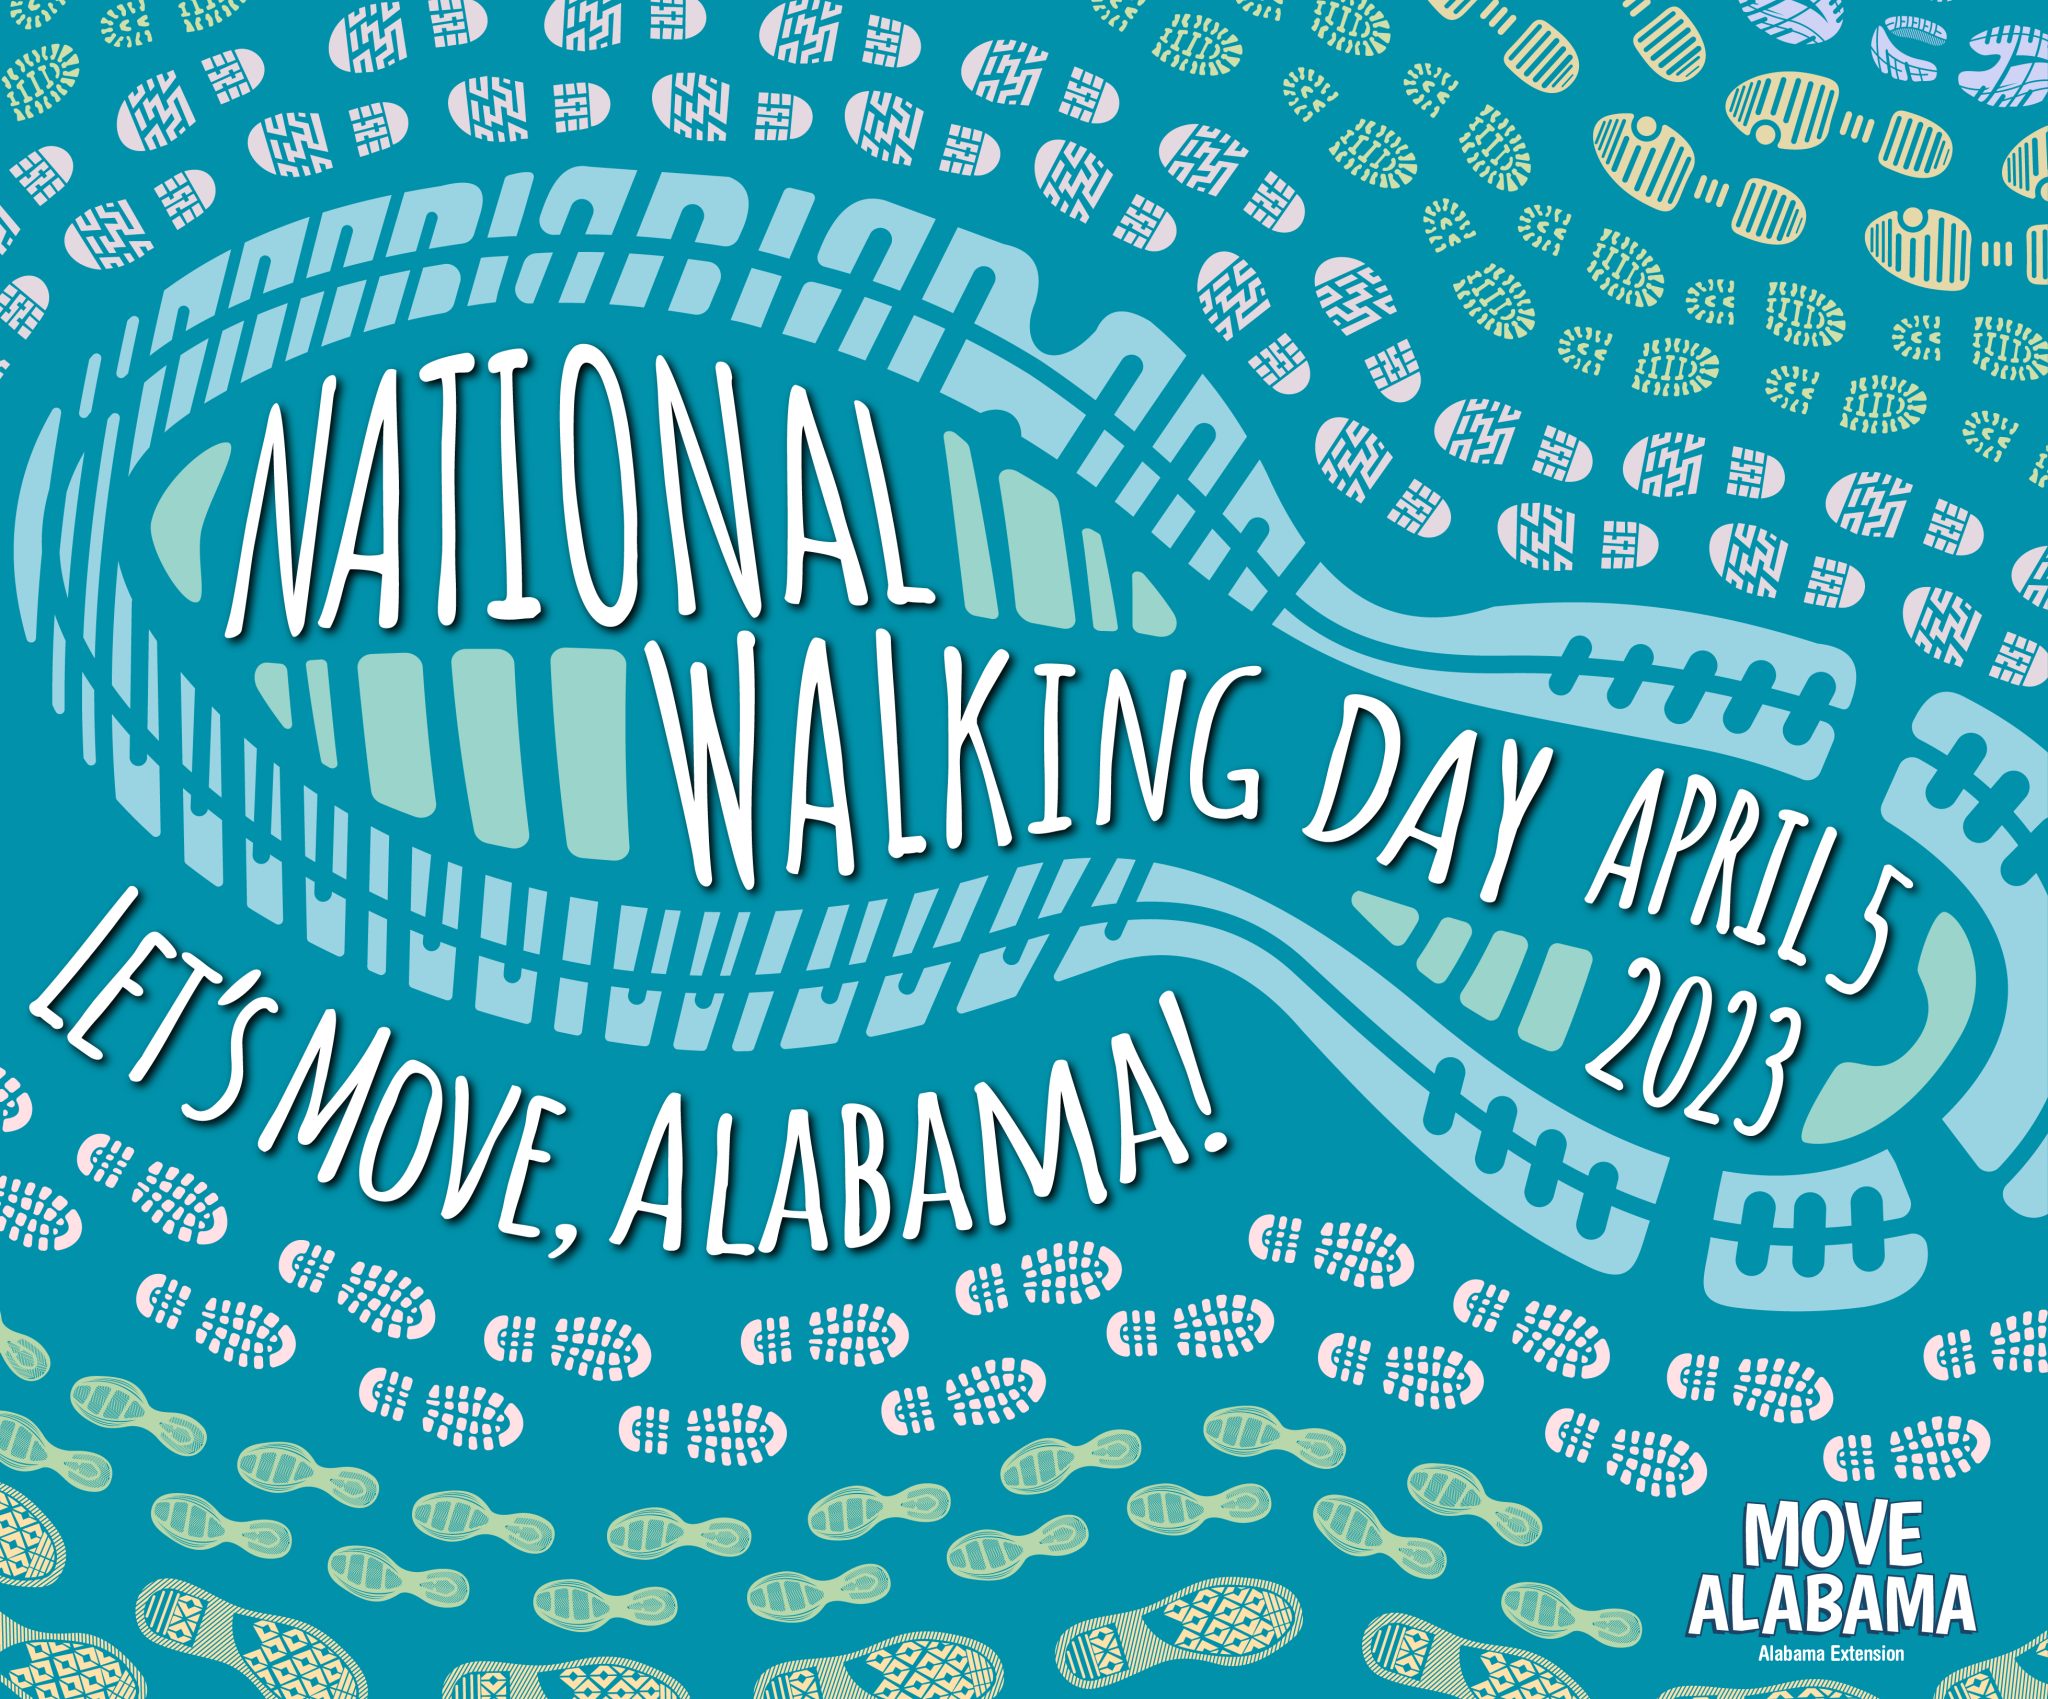 National Walking Day April 5, 2023. Let's Move, Alabama!